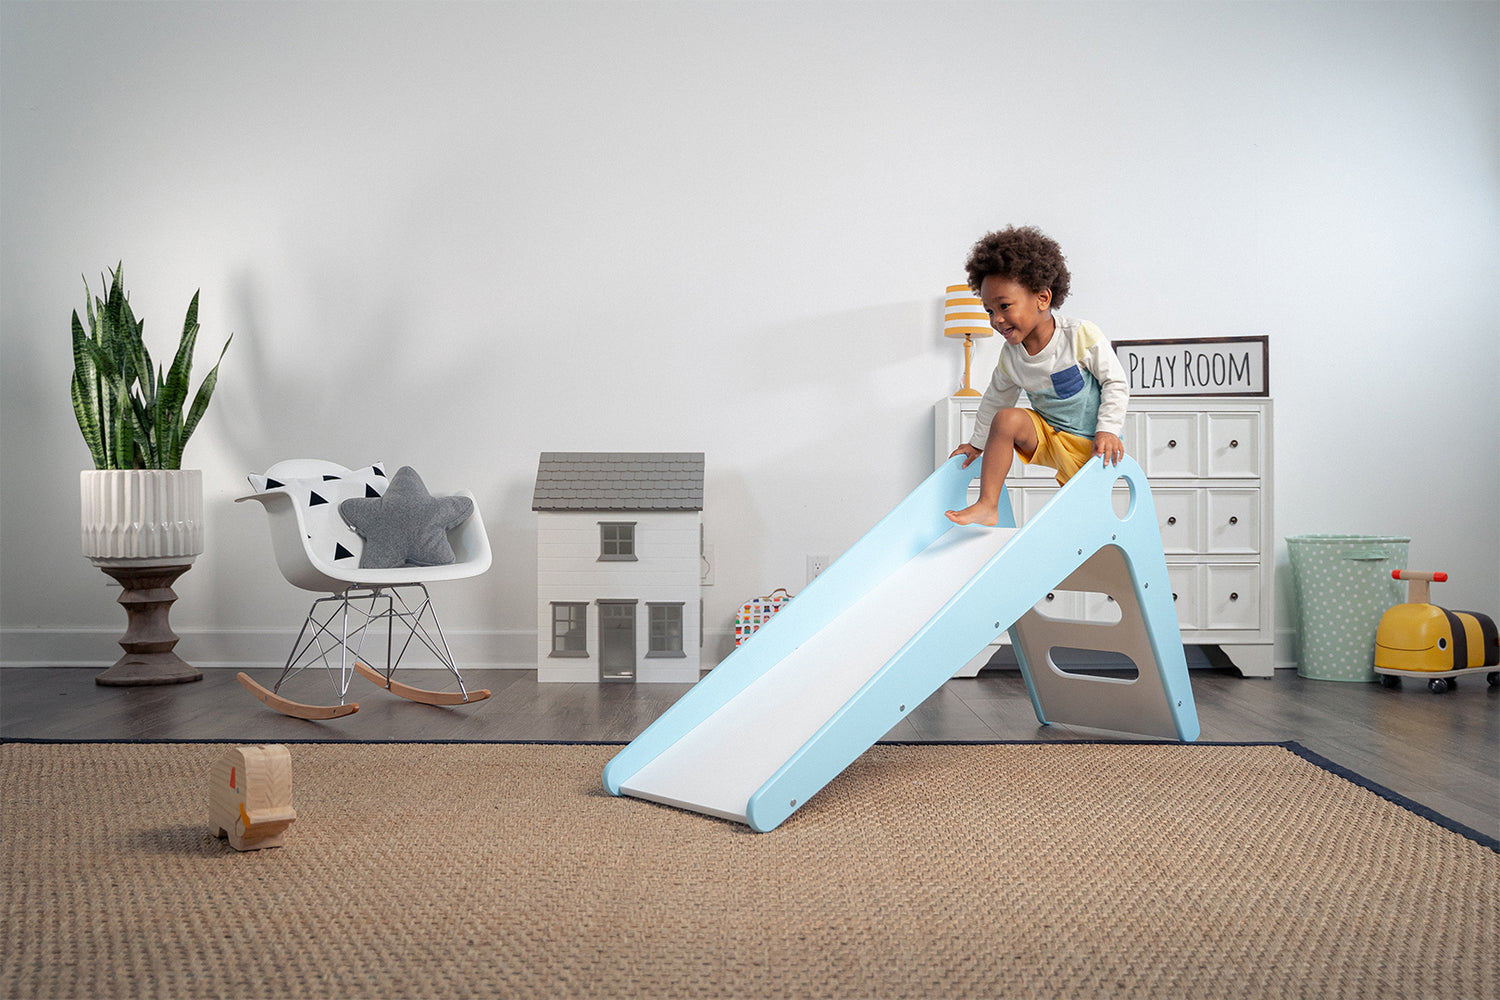 Toddler Climbing Up Manuka - Avenlur's Safe and Fun Indoor Toddler Slide in Playroom.